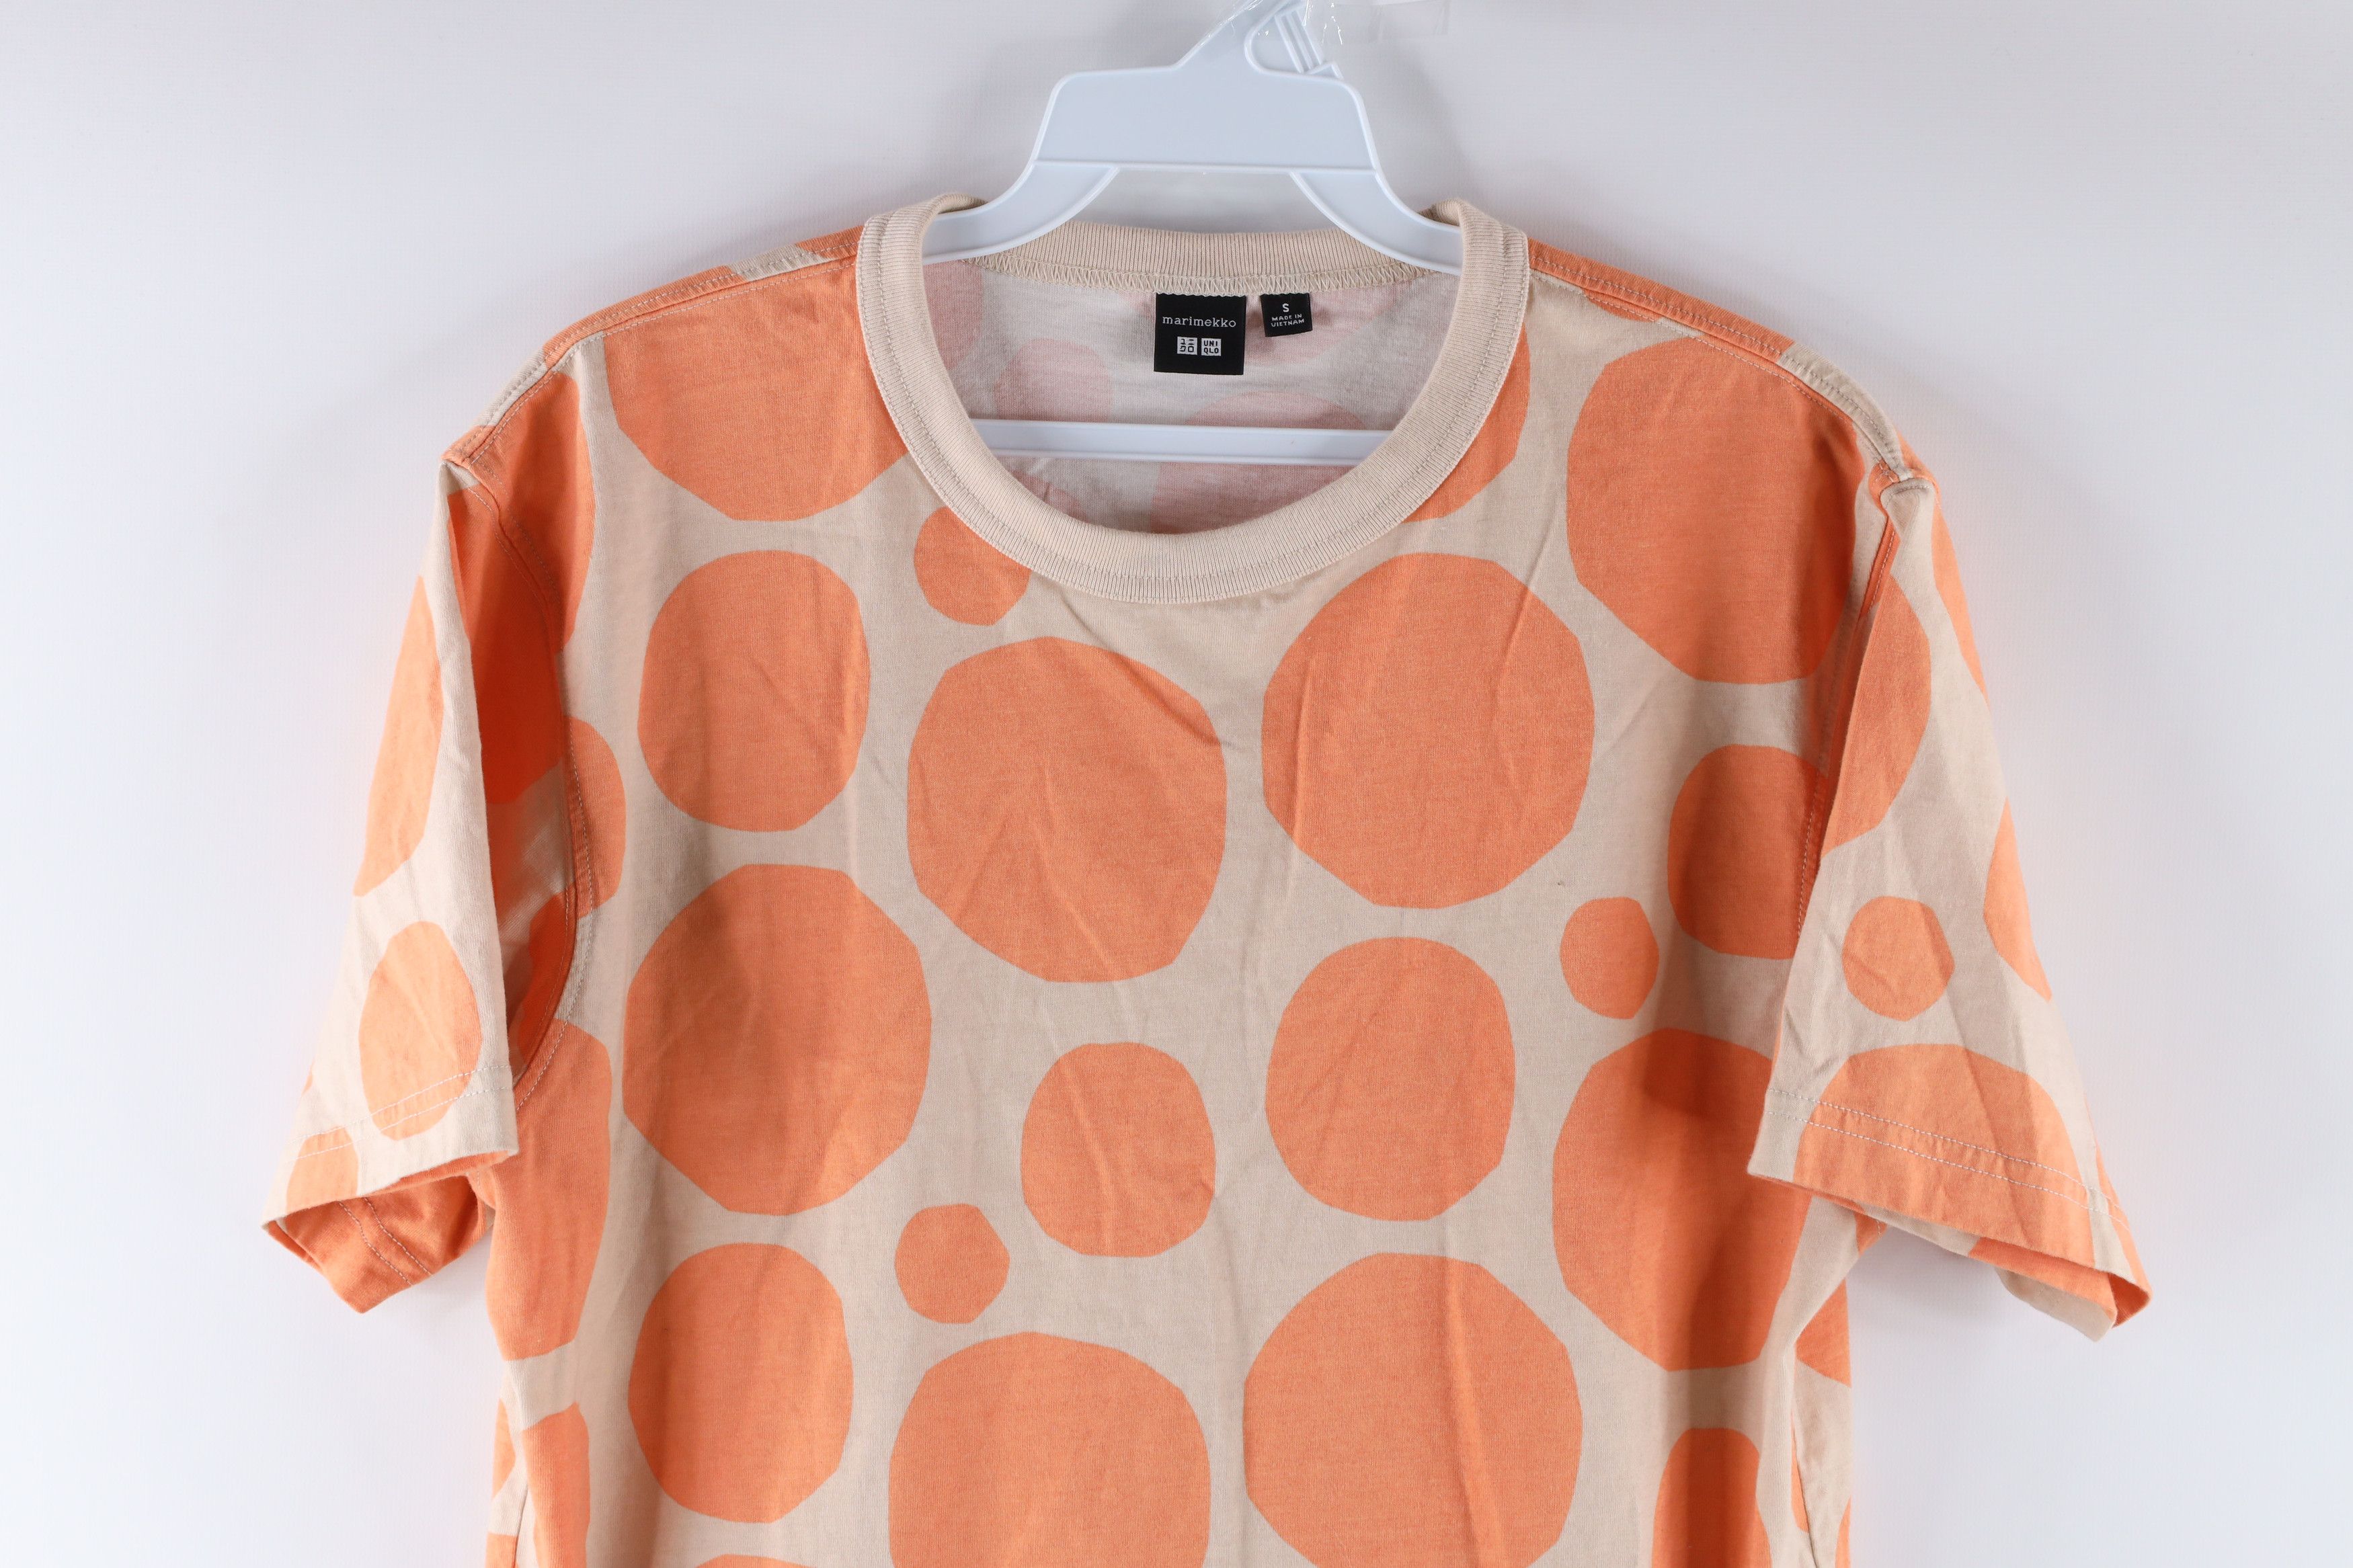 Uniqlo Uniqlo x Marimekko Polka Circle Print Short Sleeve T-Shirt Size S / US 4 / IT 40 - 2 Preview